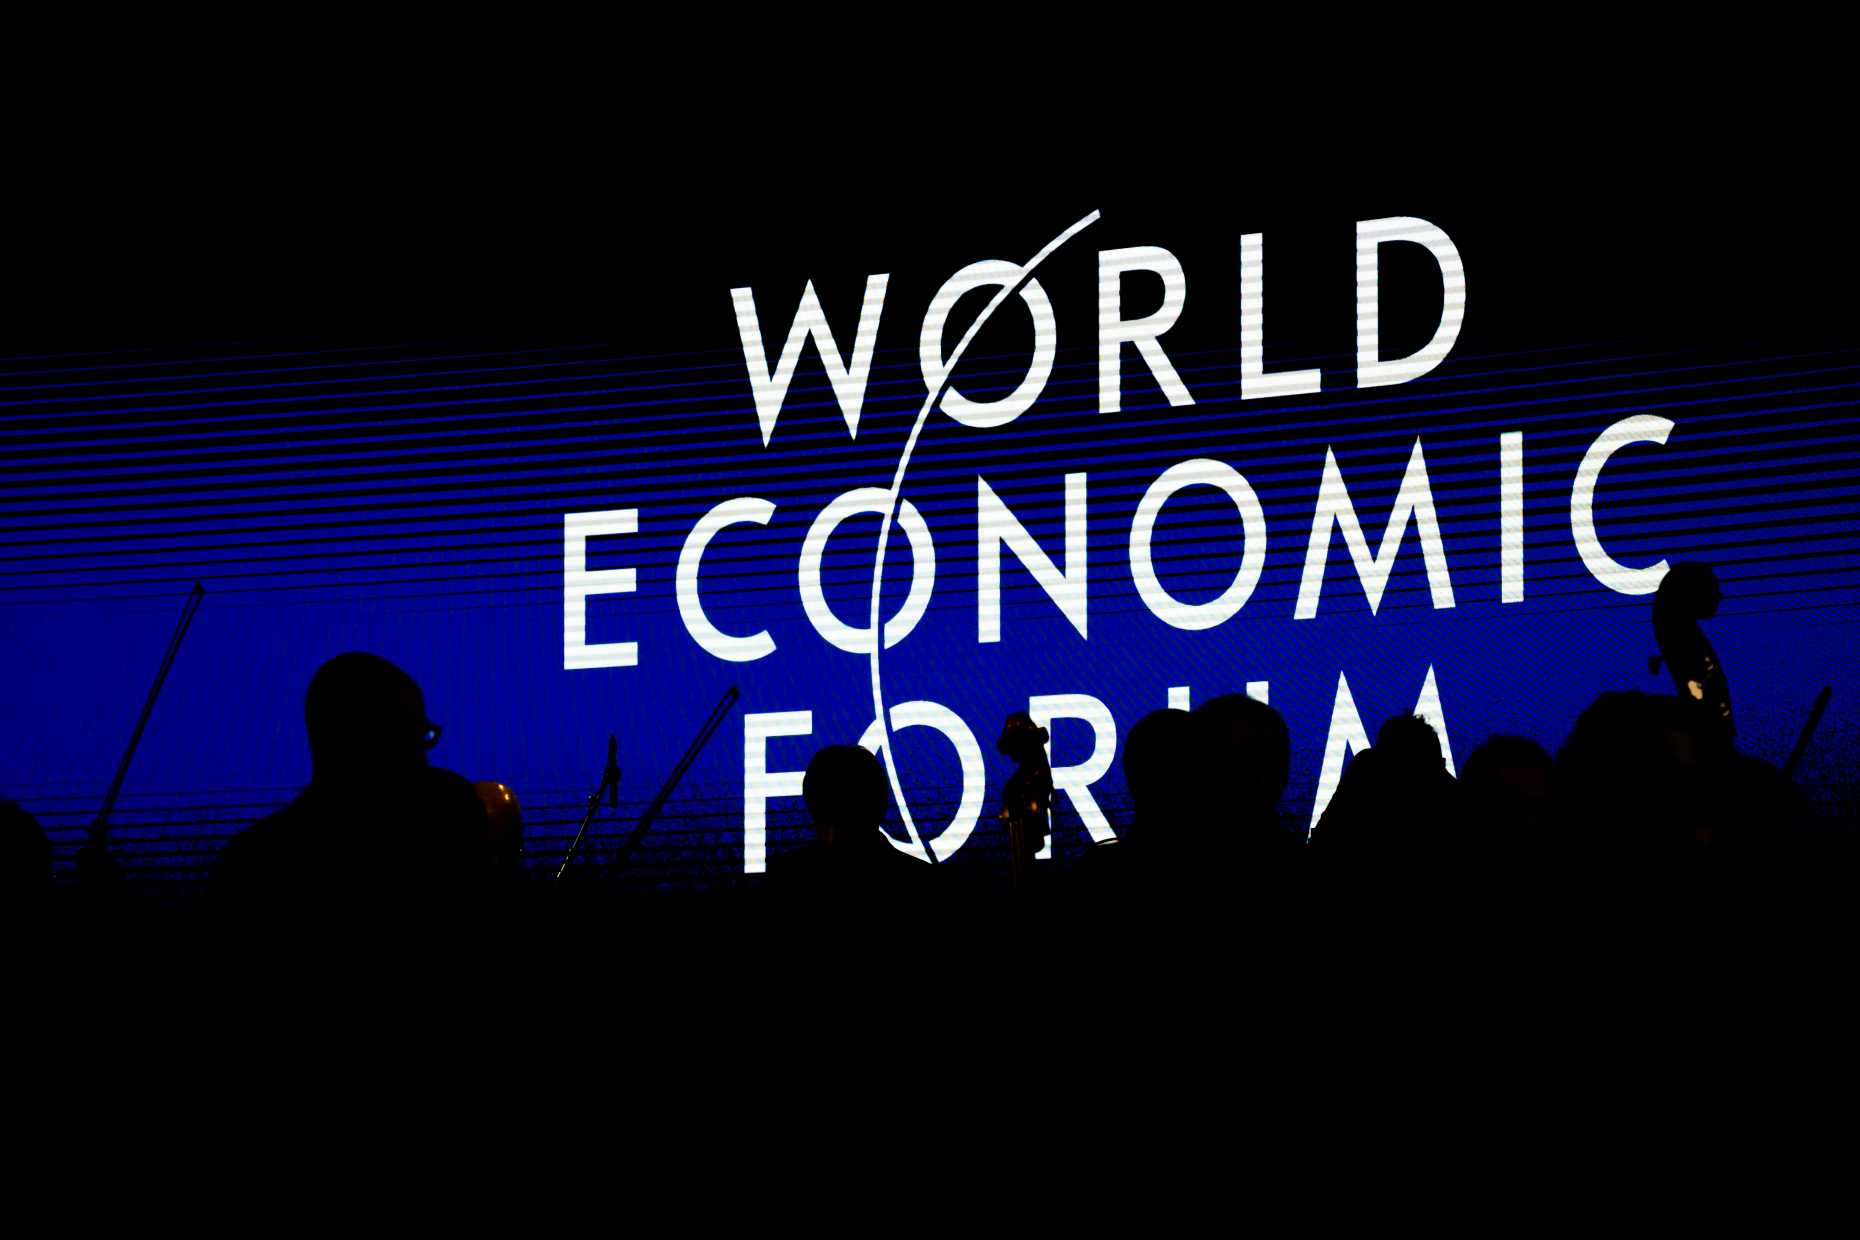 Enlarged view: World Economic Forum image